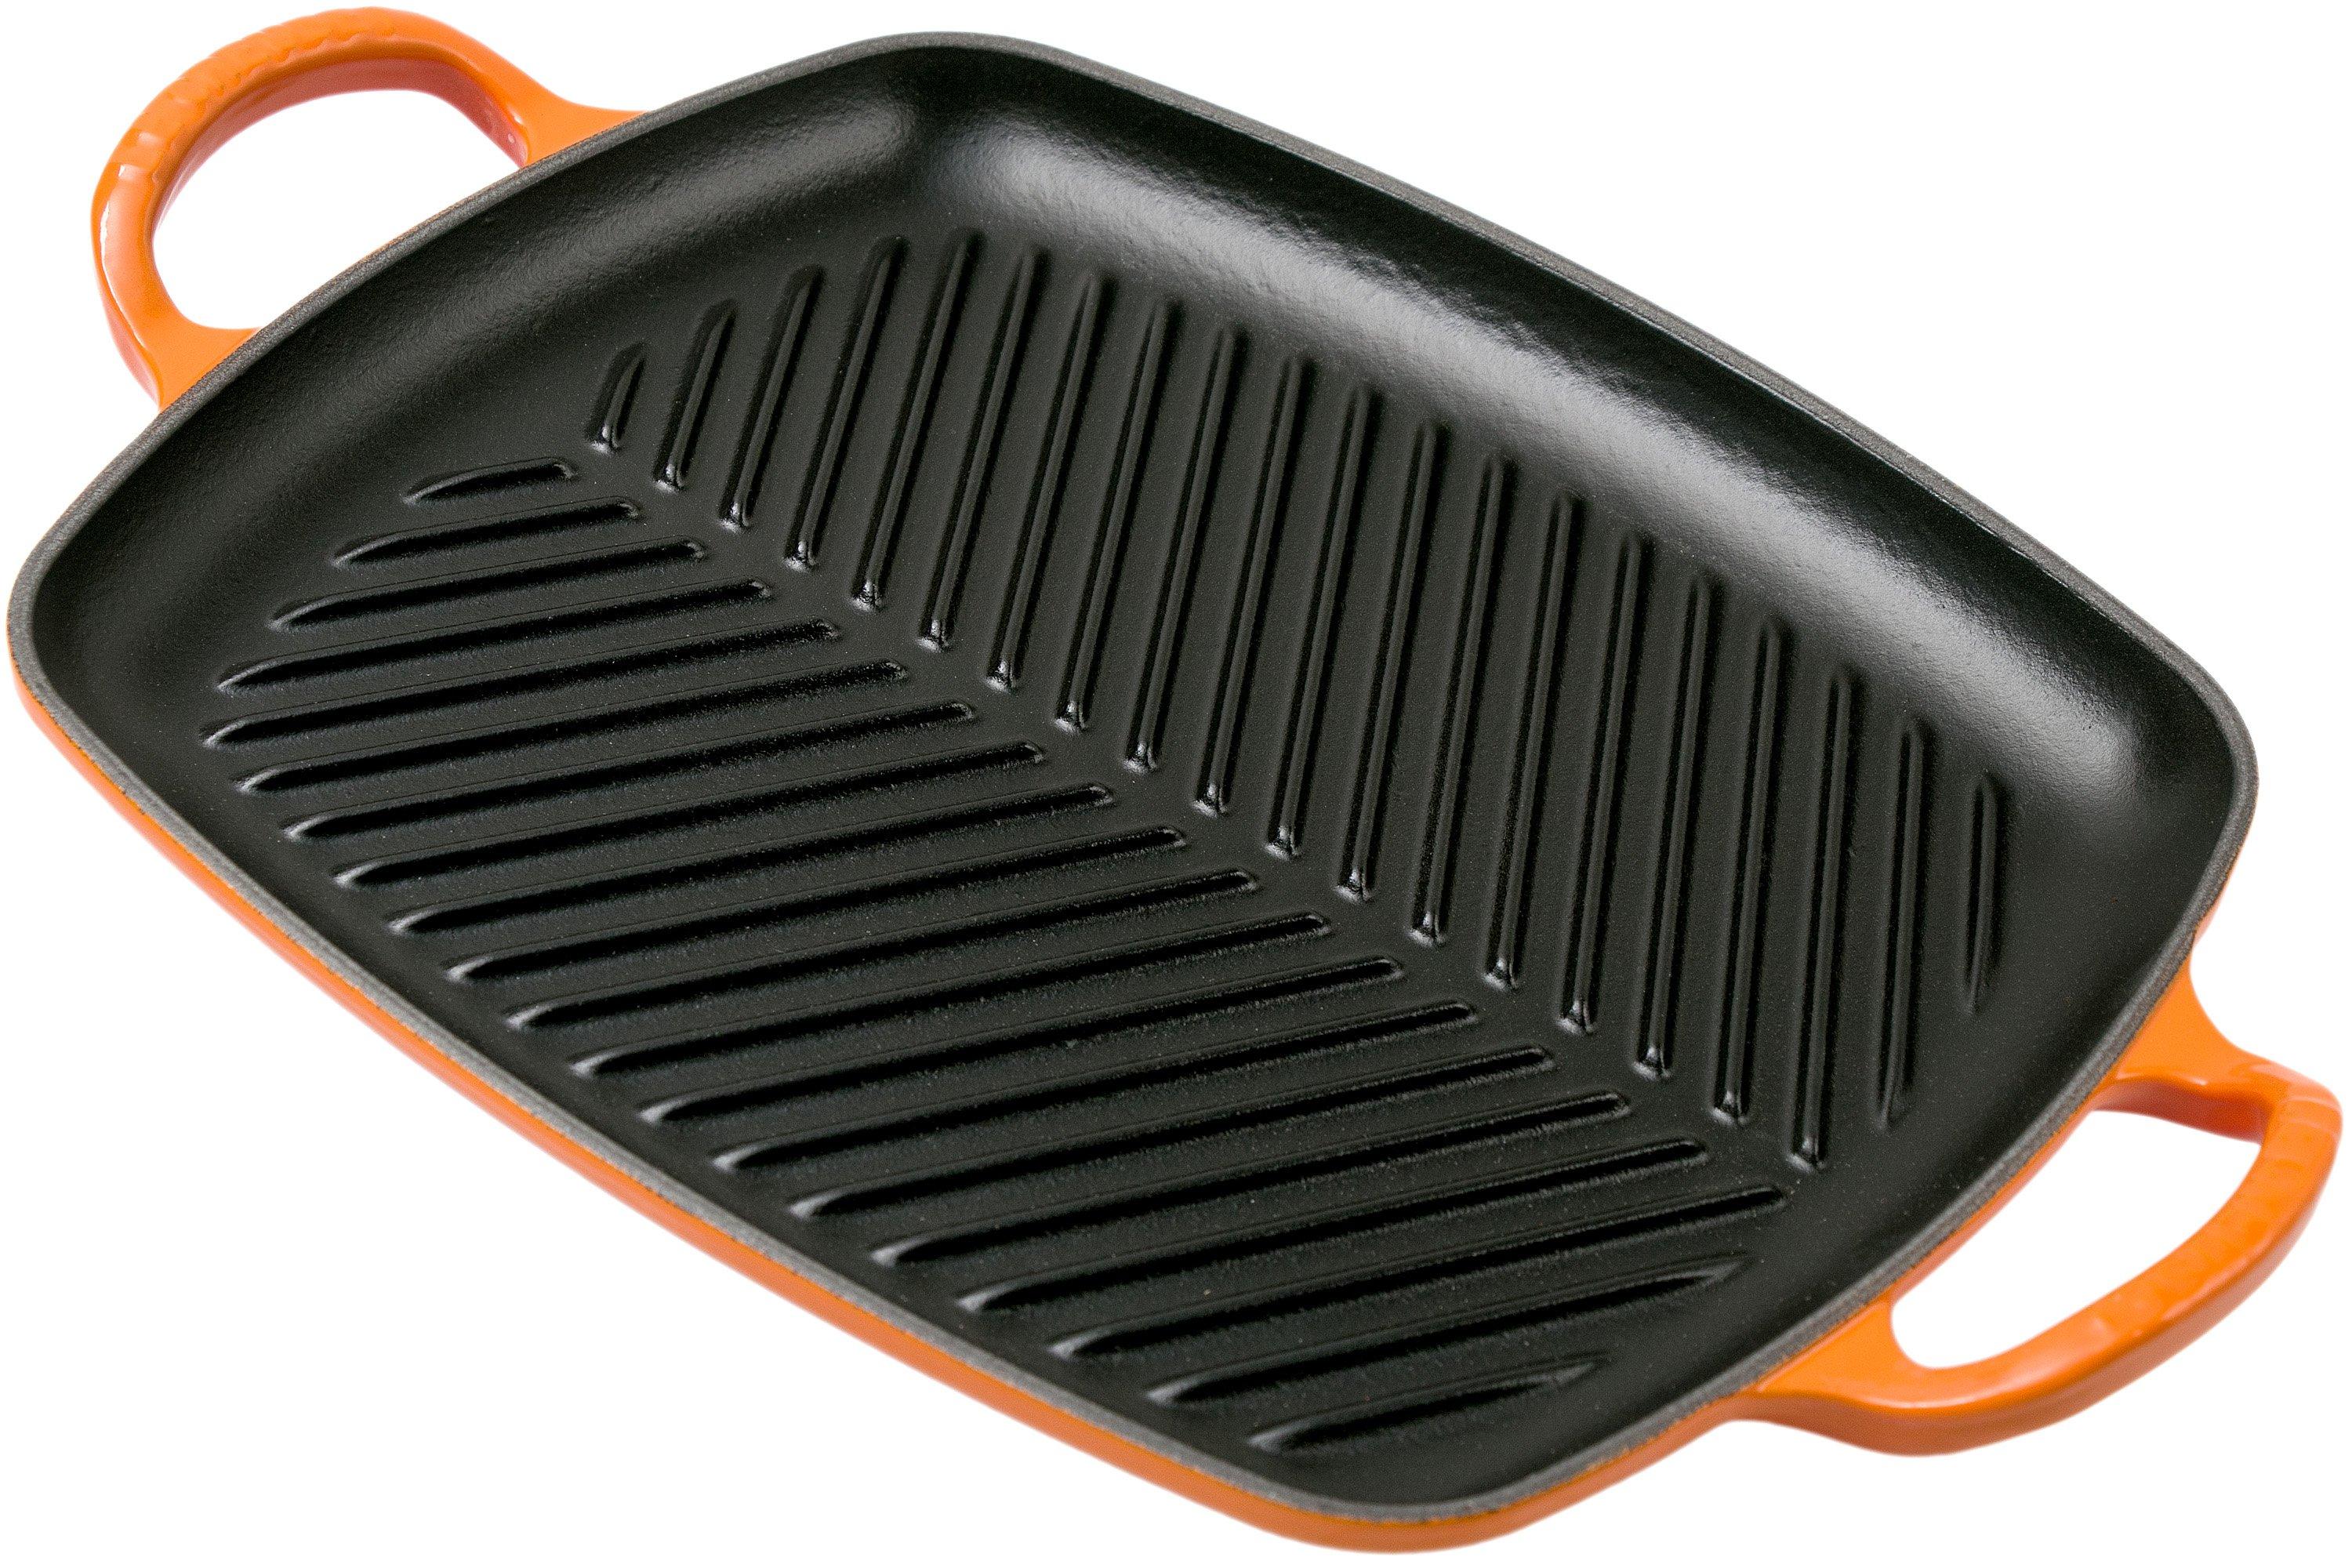 leef ermee Grof Voor u Le Creuset La Fonte enamel grill pan 30 cm, orange | Advantageously  shopping at Knivesandtools.com